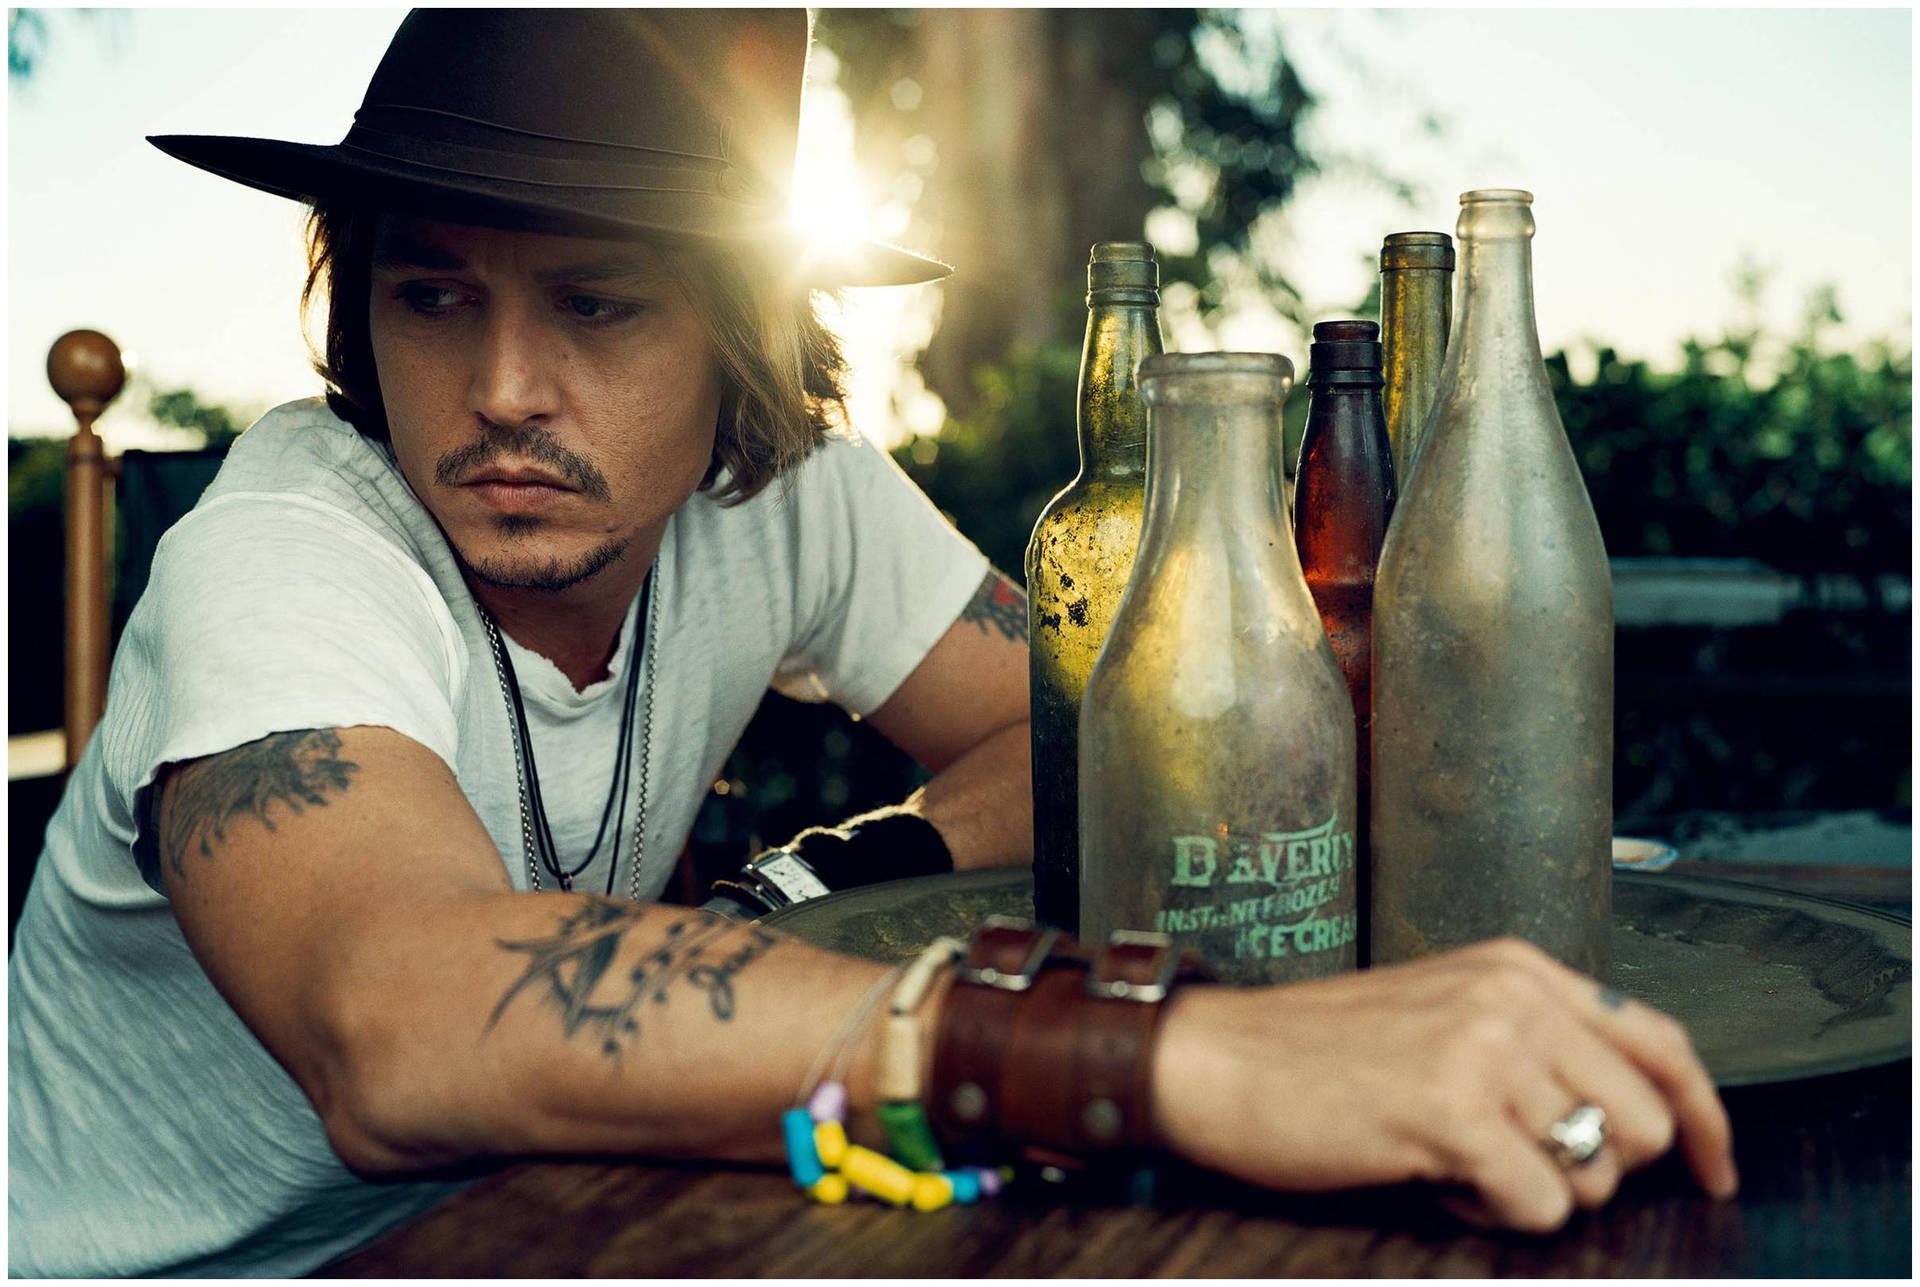 Johnny Depp Photoshoot Background